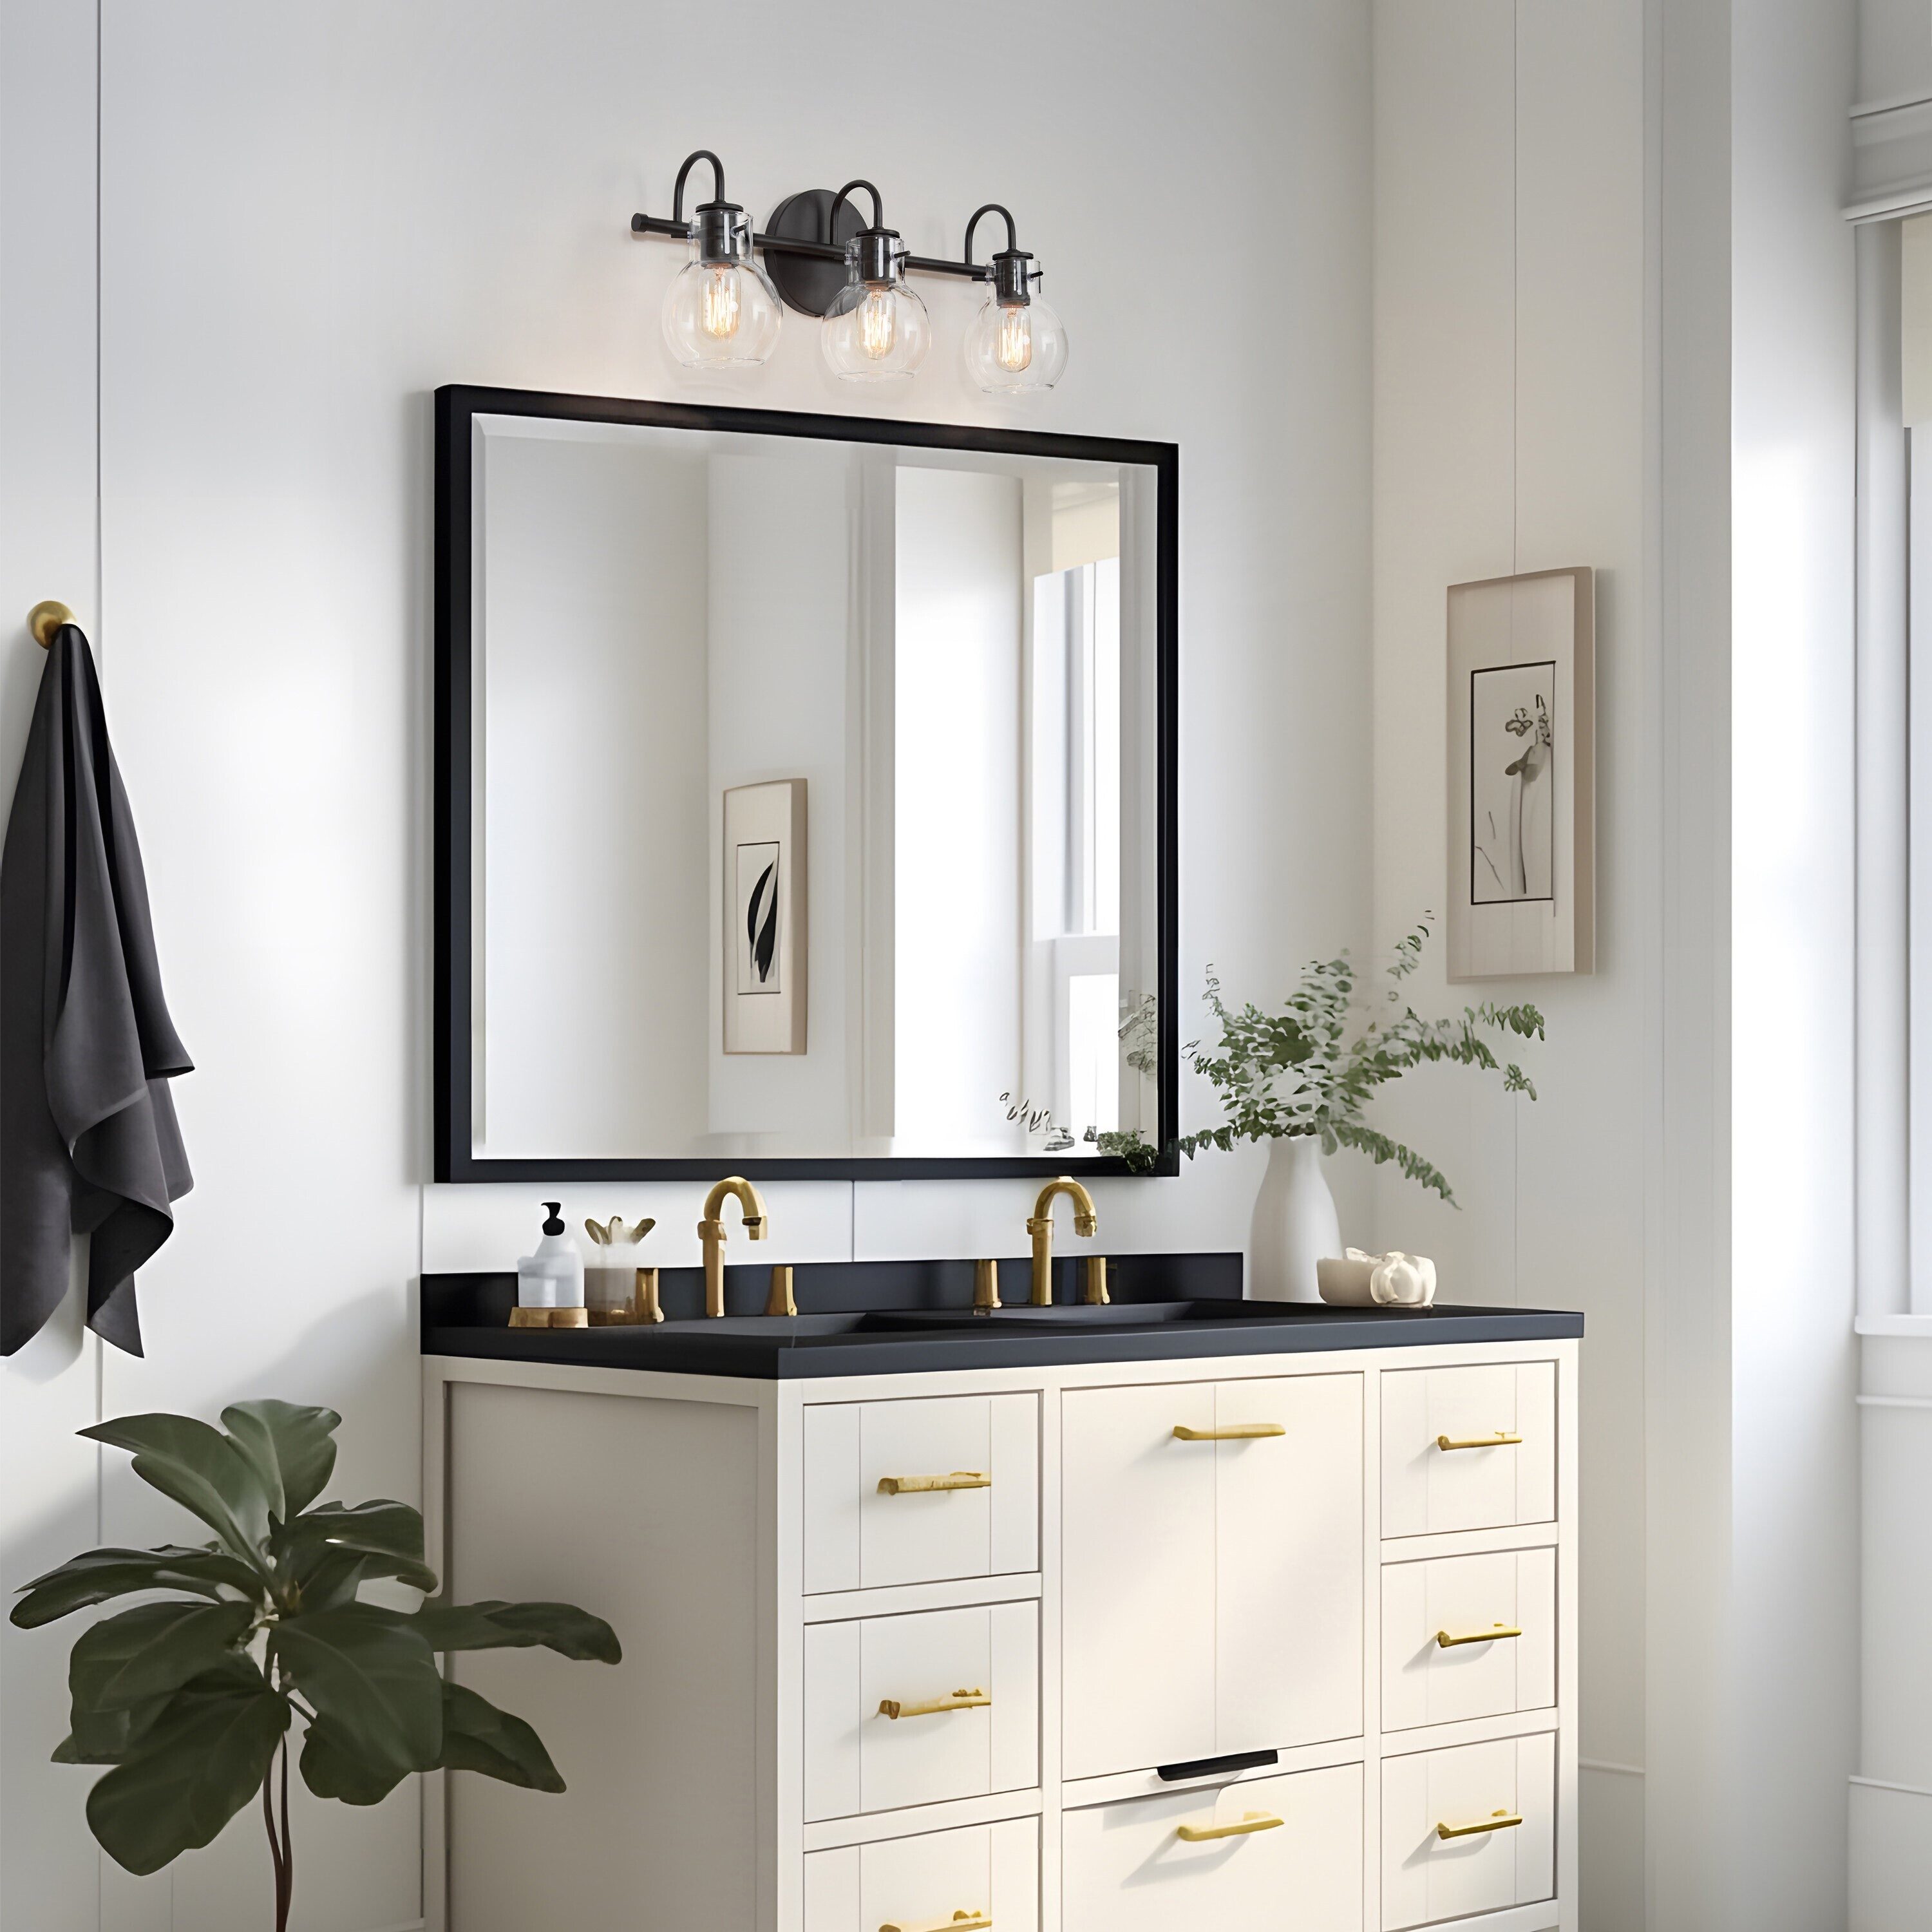 LNC 22 in. 3-Light Modern Aged Brass and Black Bathroom Vanity